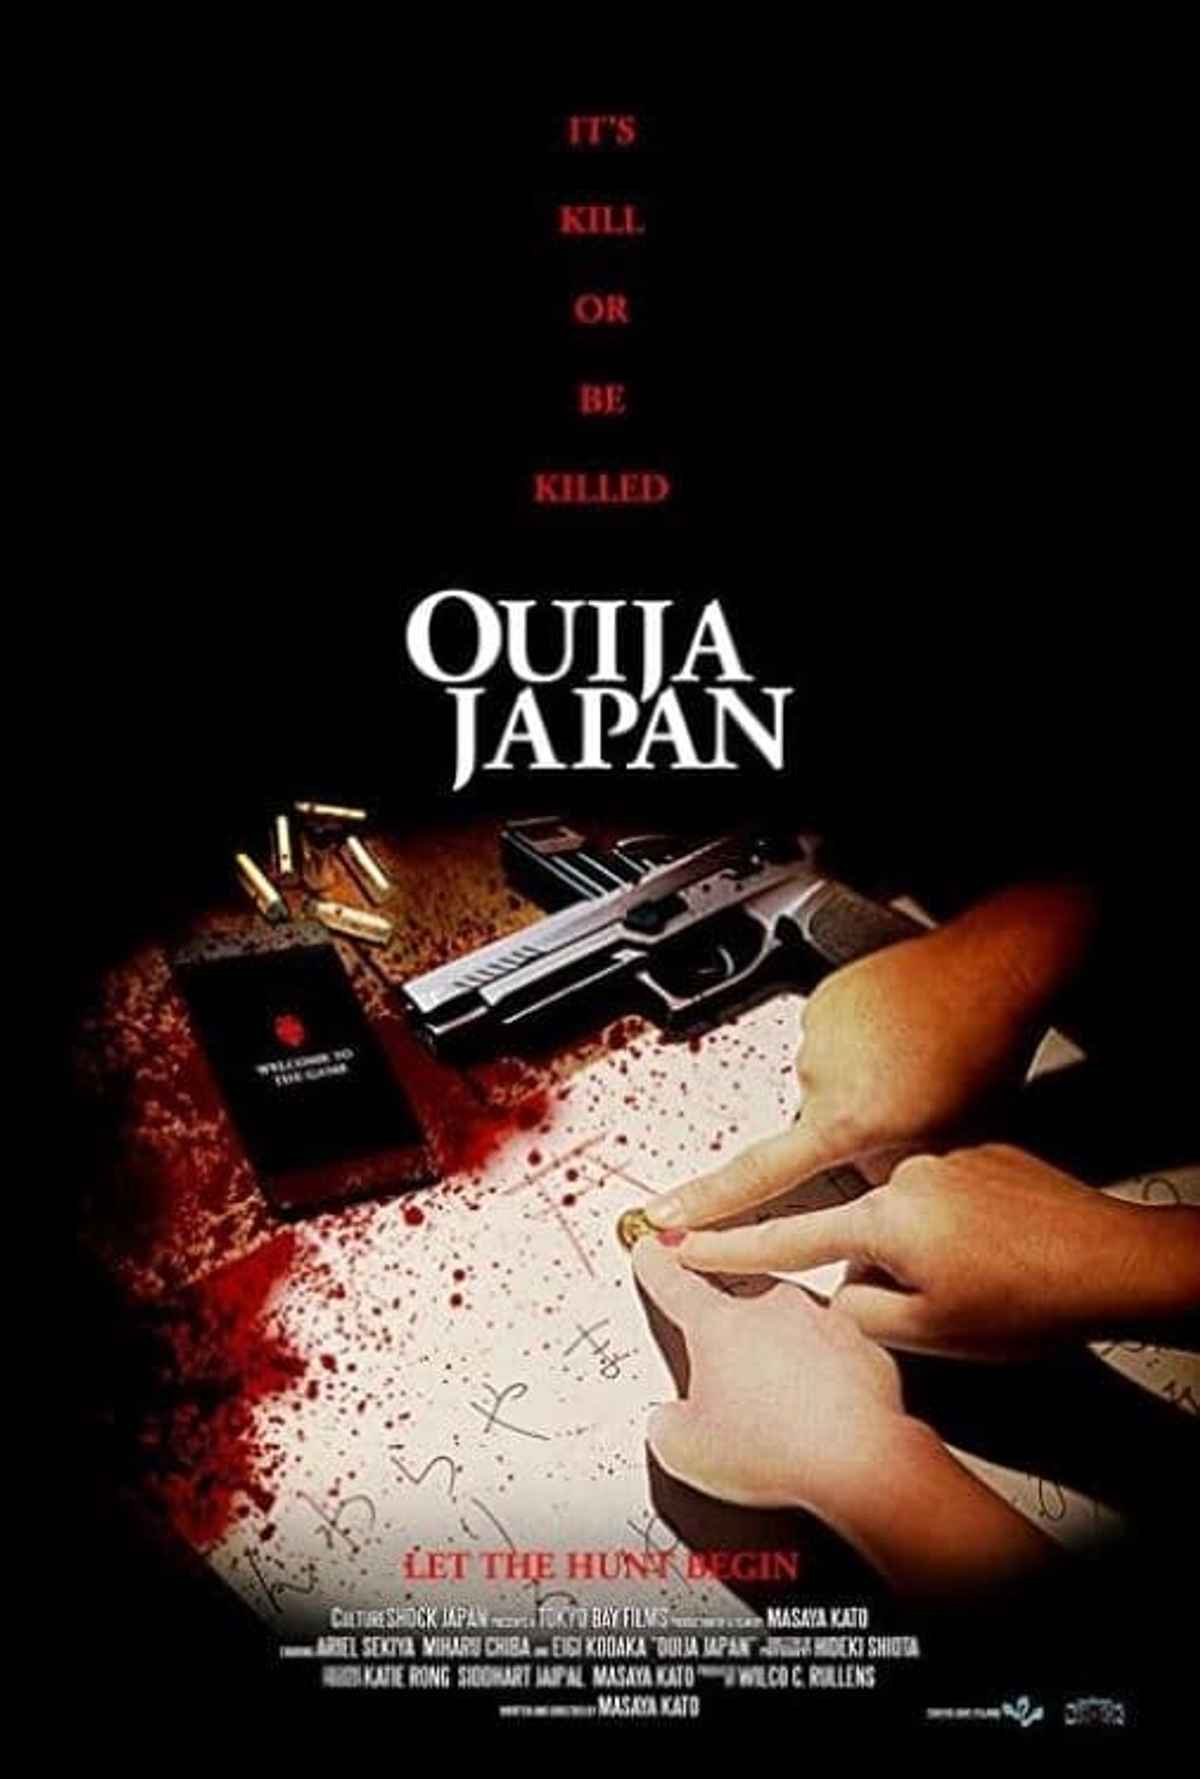 watch ouija full movie online